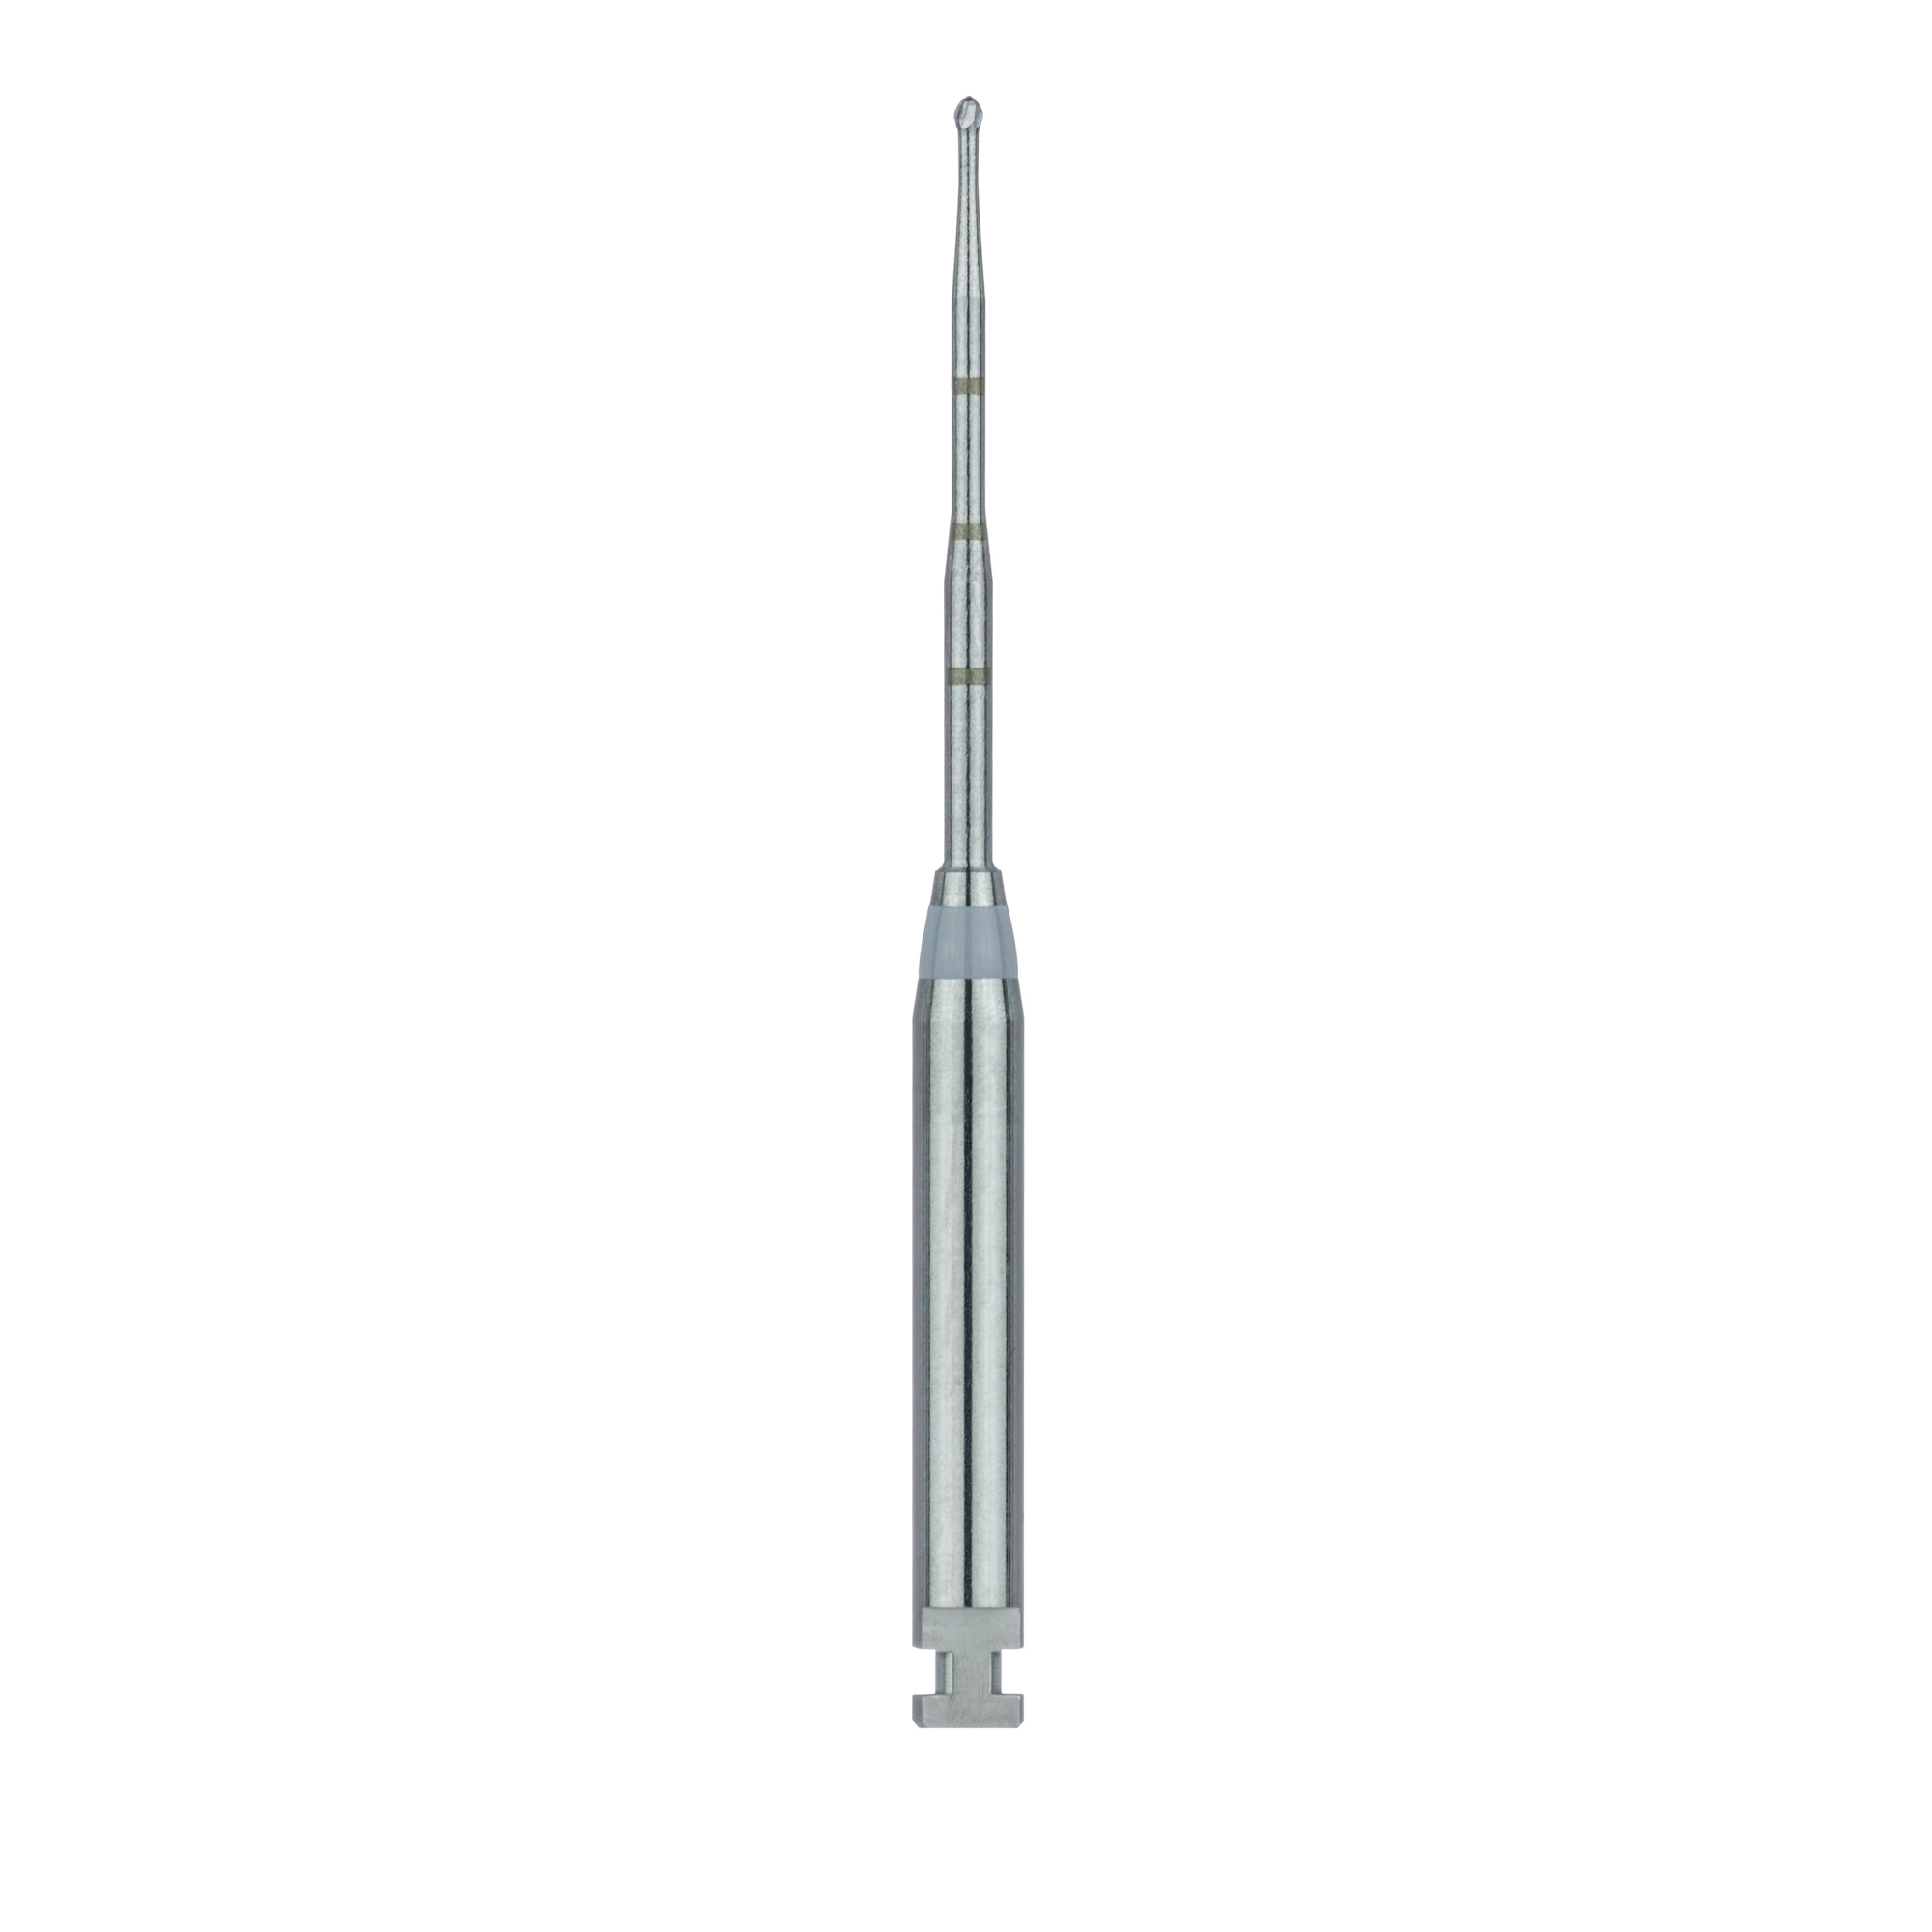 HM191A-006-RAXL Long Neck Endo Access Bur, Carbide Cutting Tip, Round, 0.6mm Ø, Length 34mm, RA